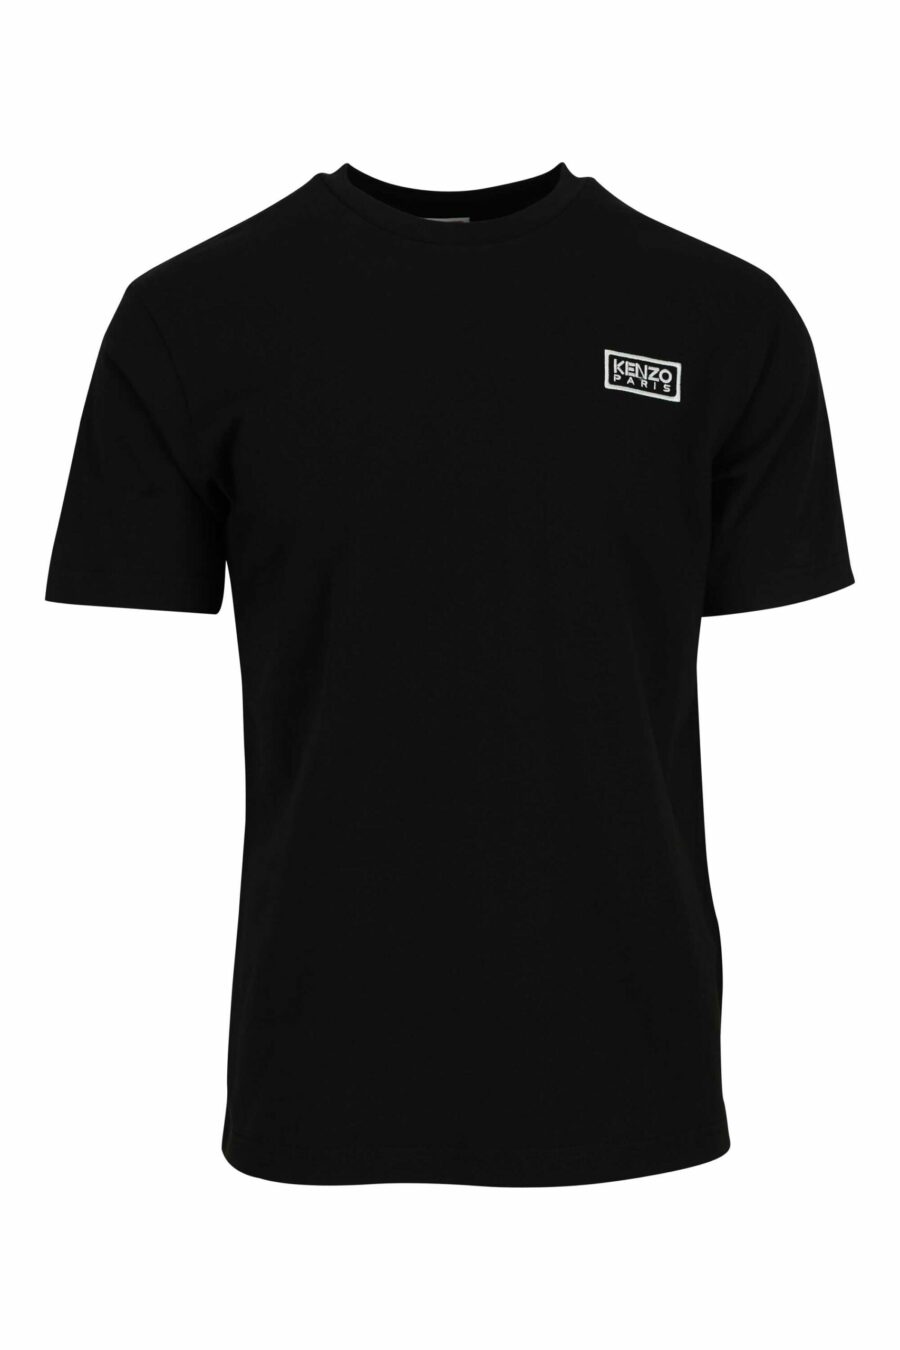 T-shirt noir avec logo "KP classic" - 3612230624443